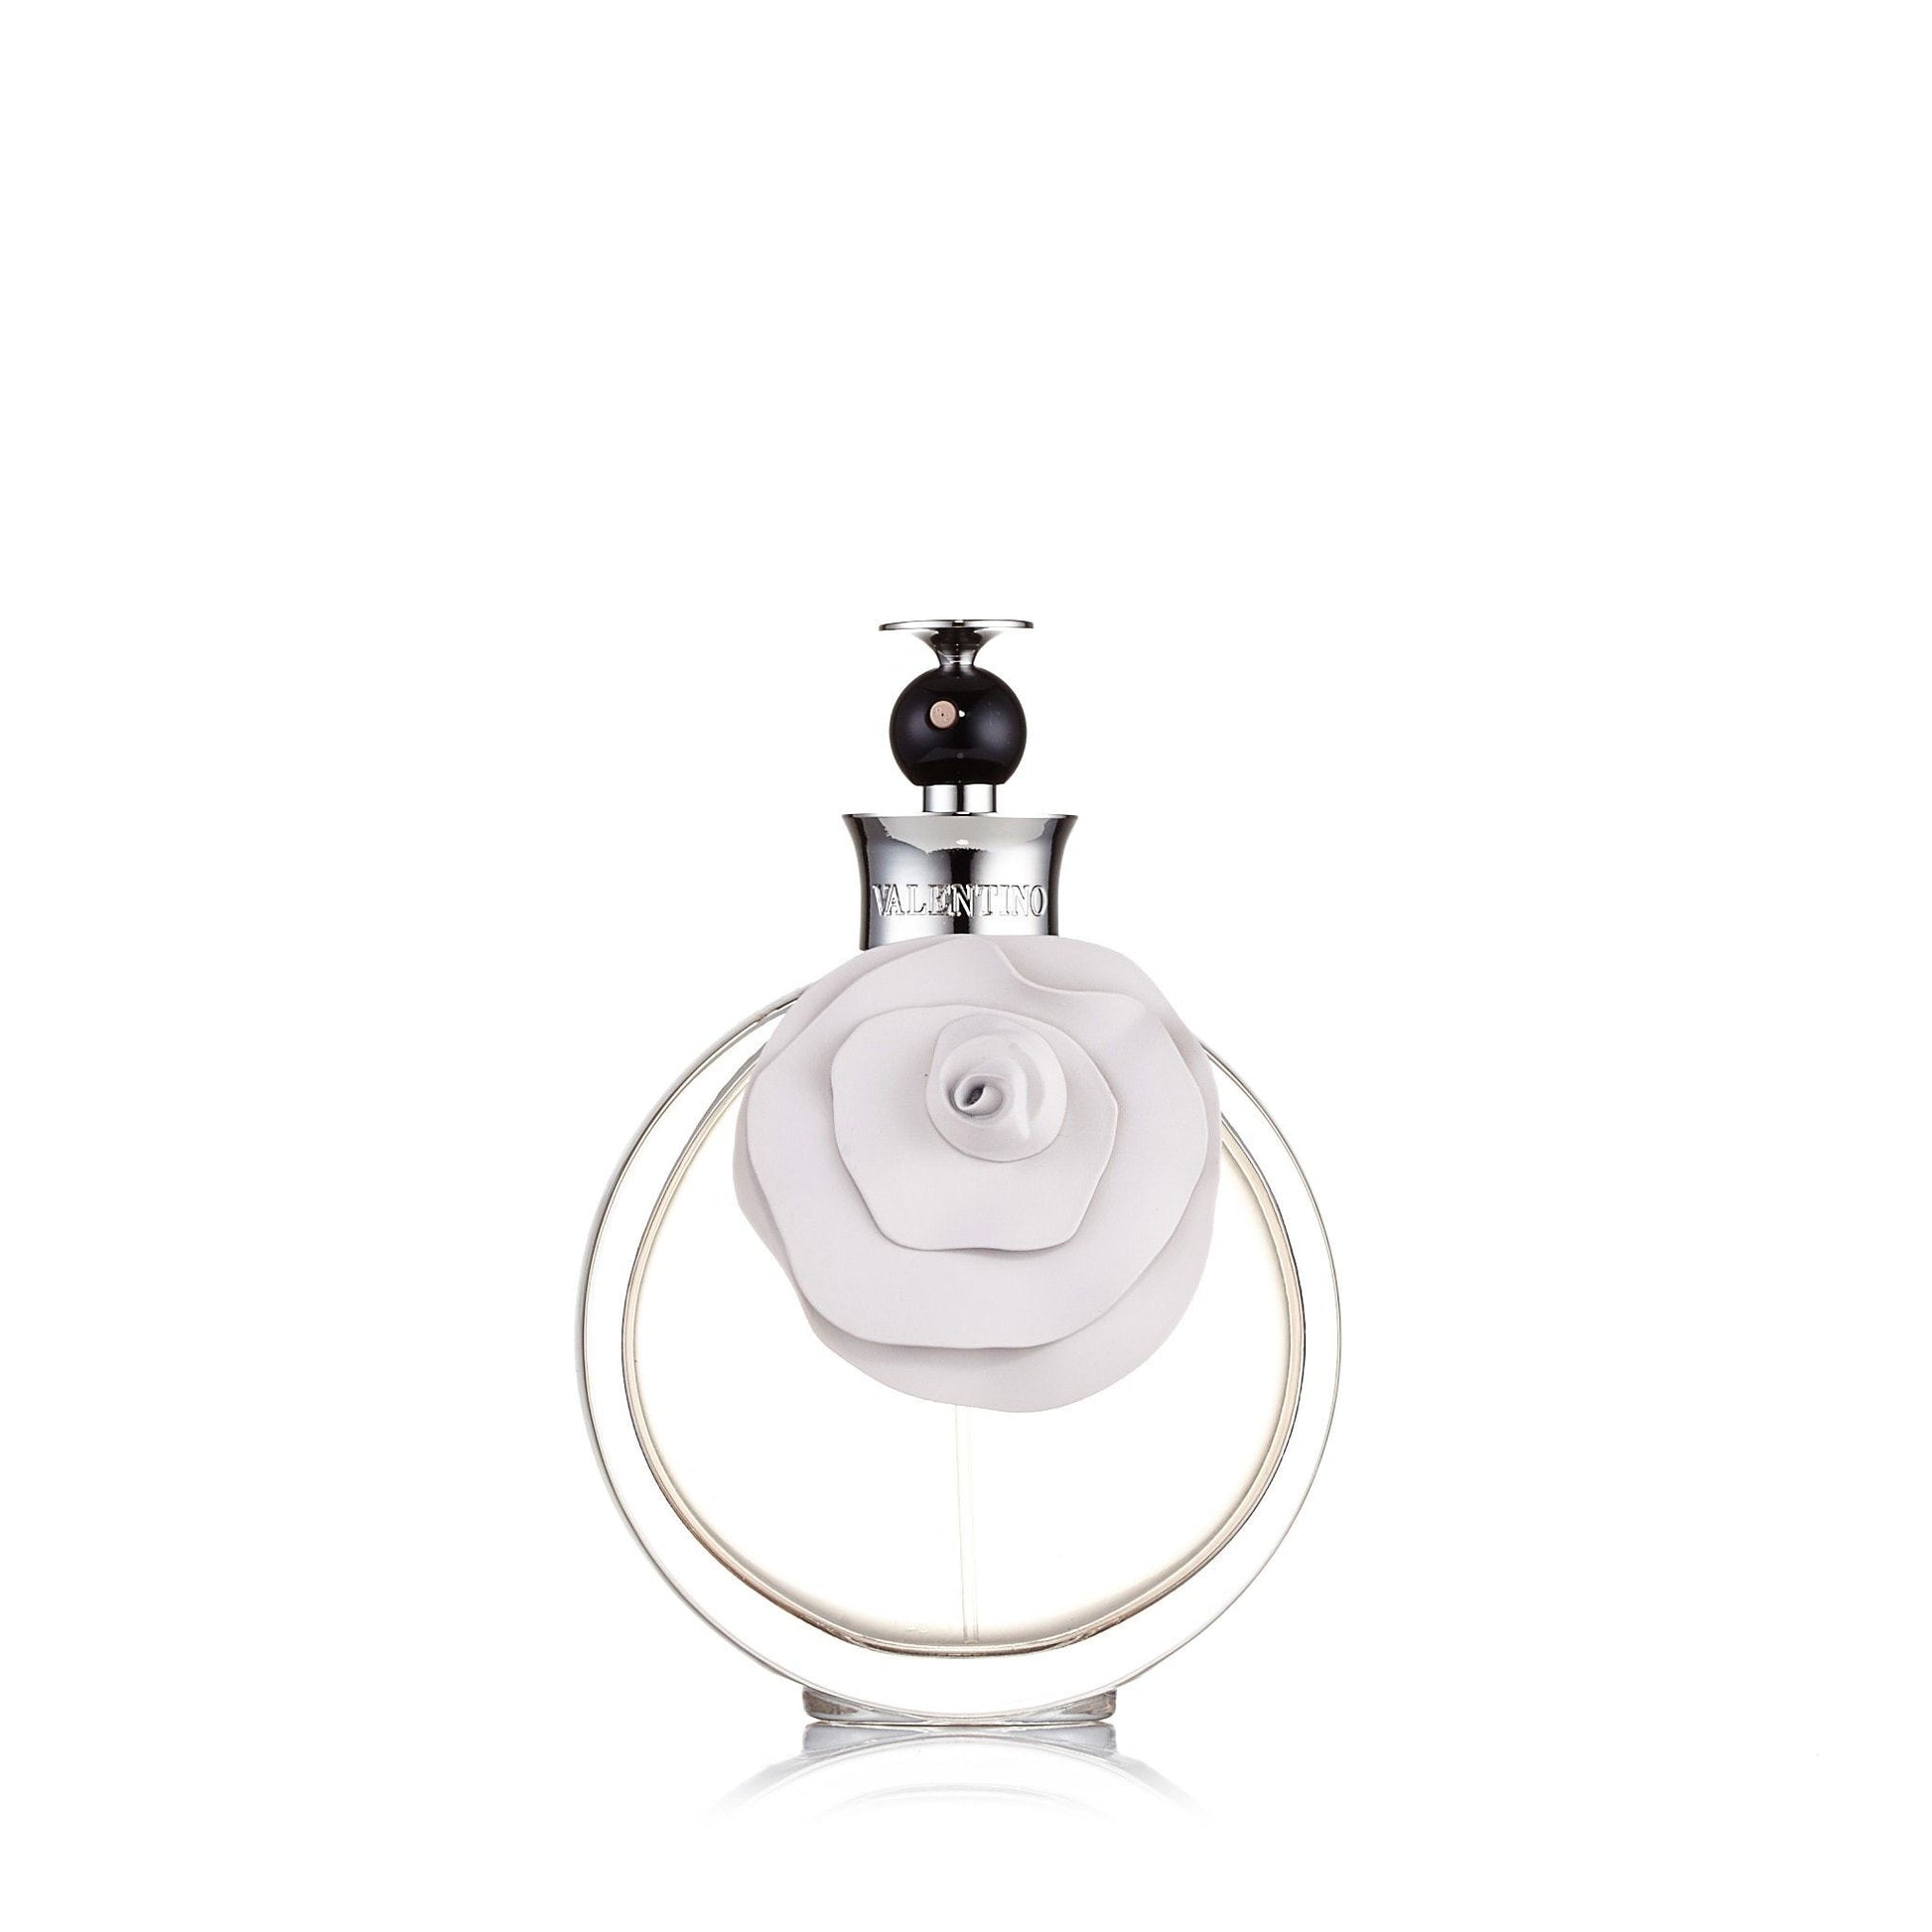 Valentina Eau de Parfum Spray for Women by Valentino, Product image 1